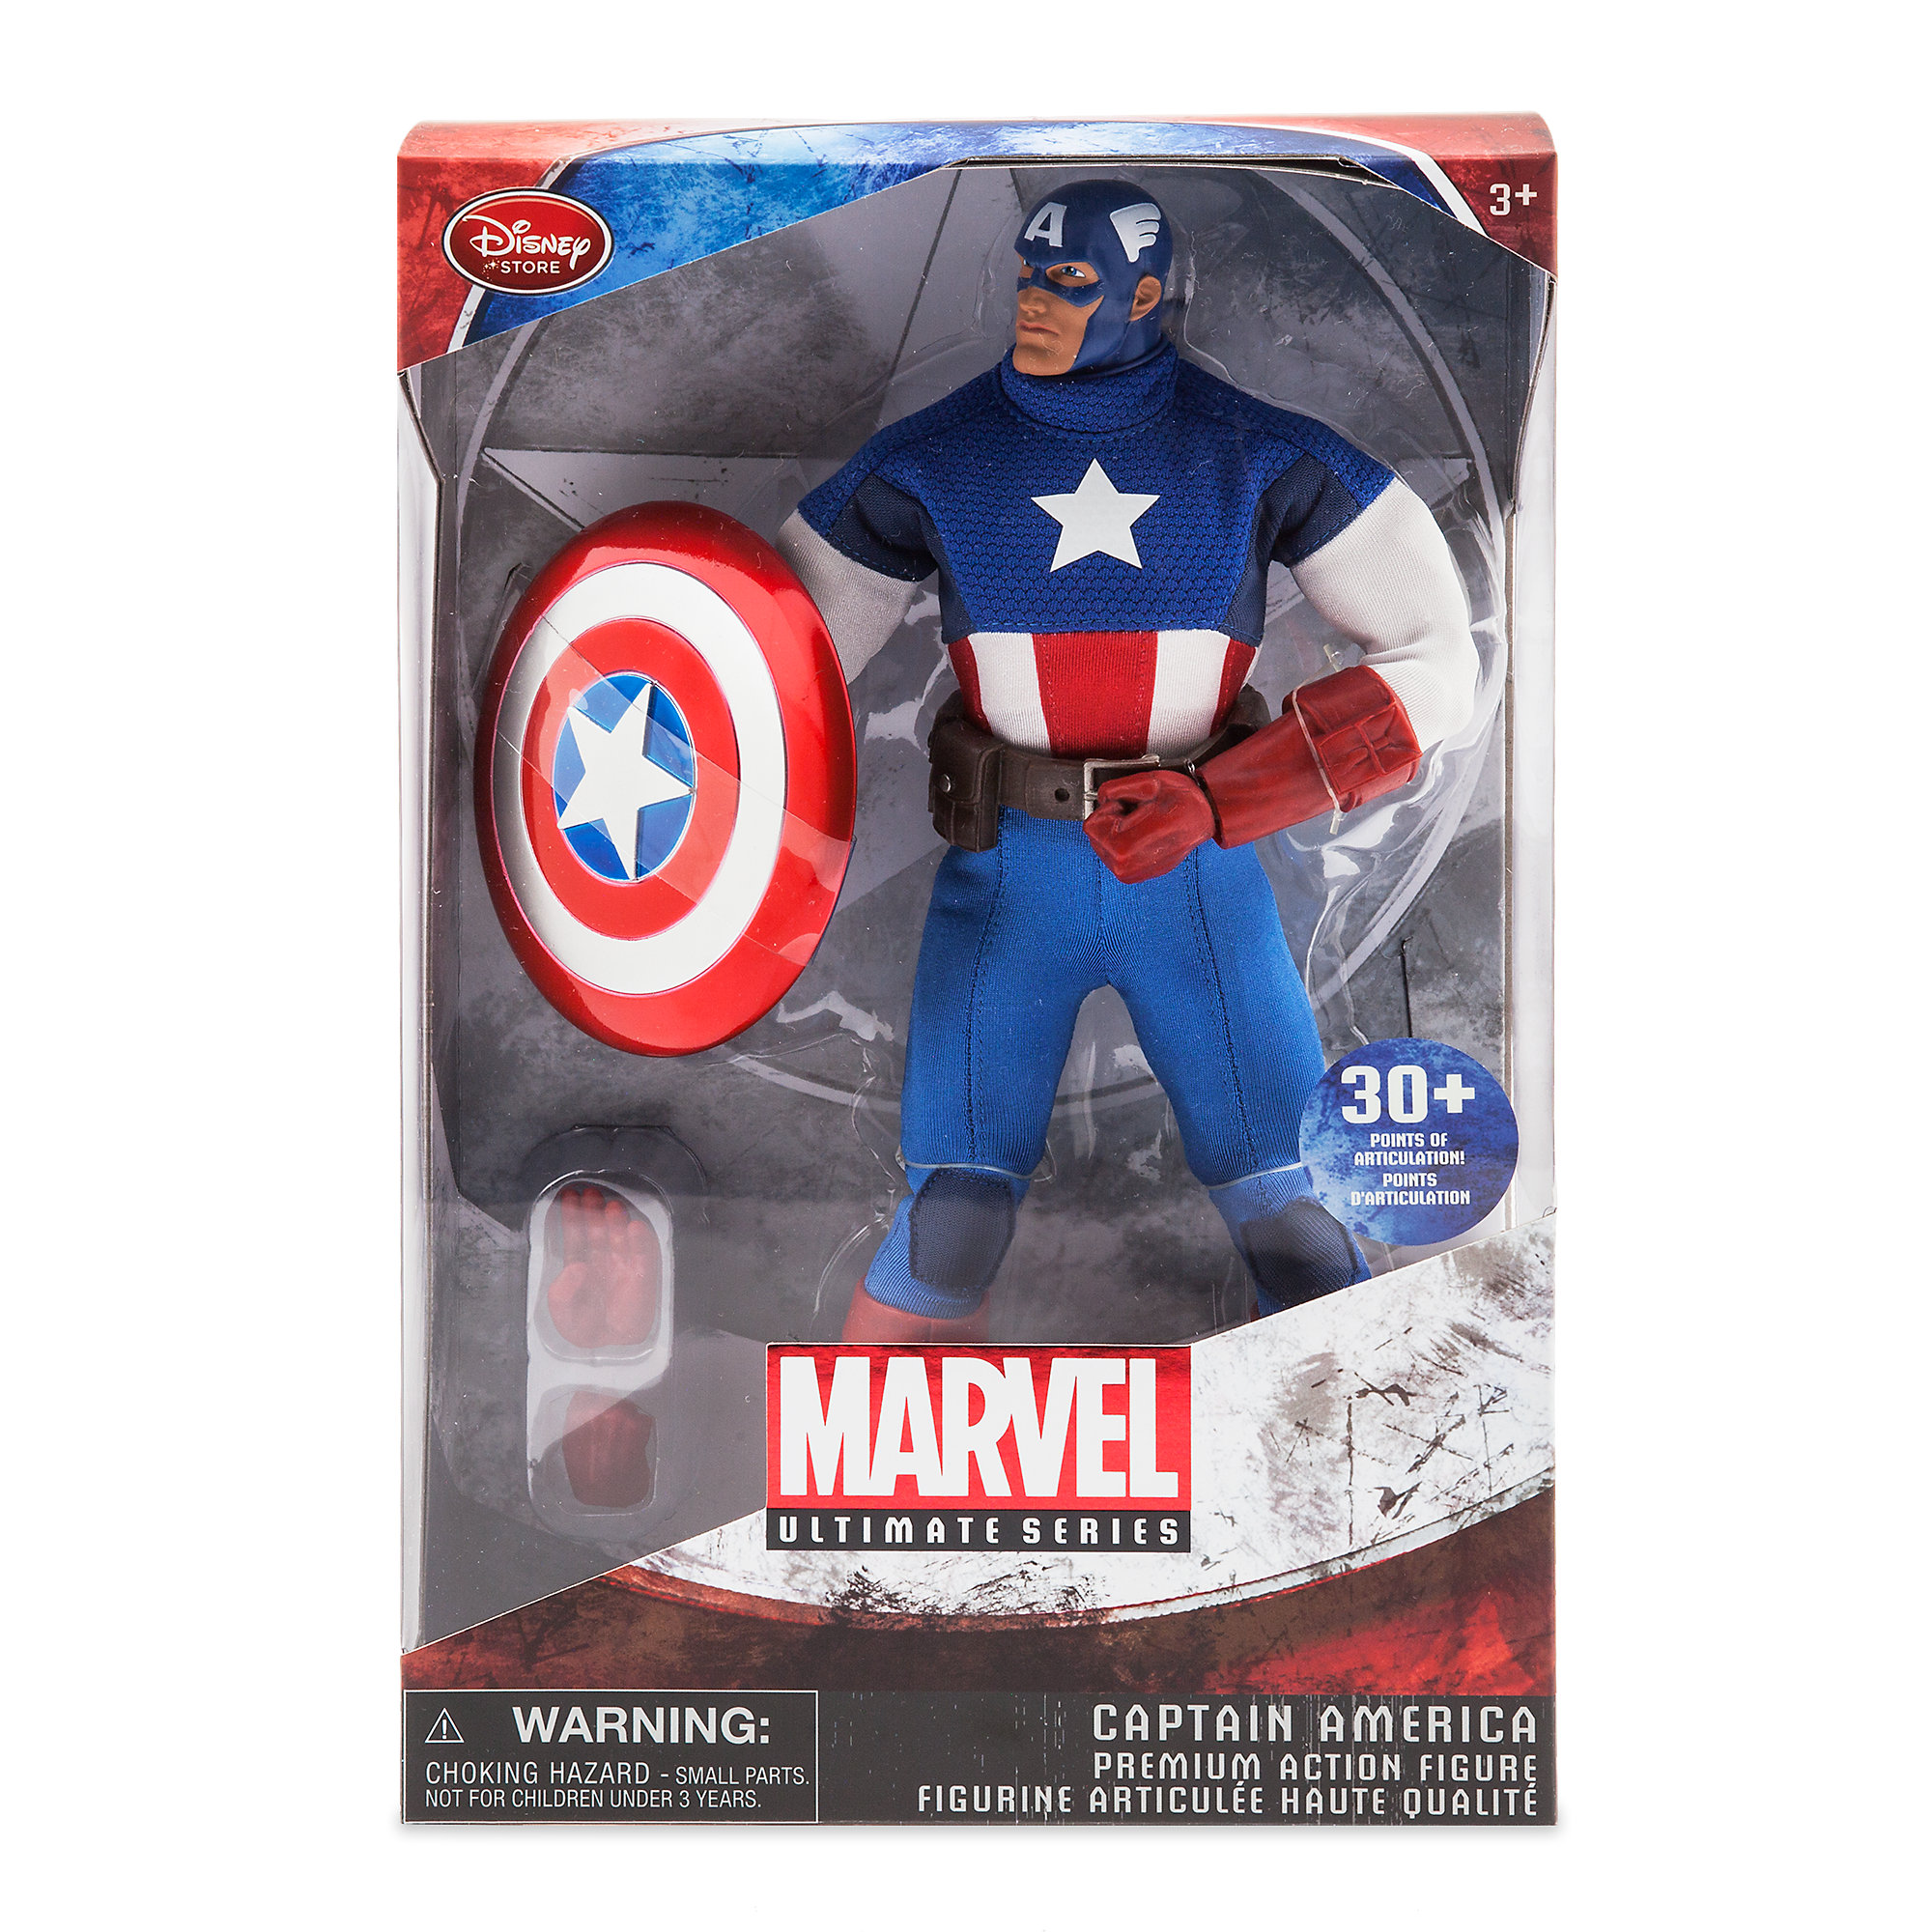 Disney Marvel Action Figures. Disney Store Marvel Action Figures. Marvel Heroes Captain America. Disney Merchandise Captain America. Active capitan